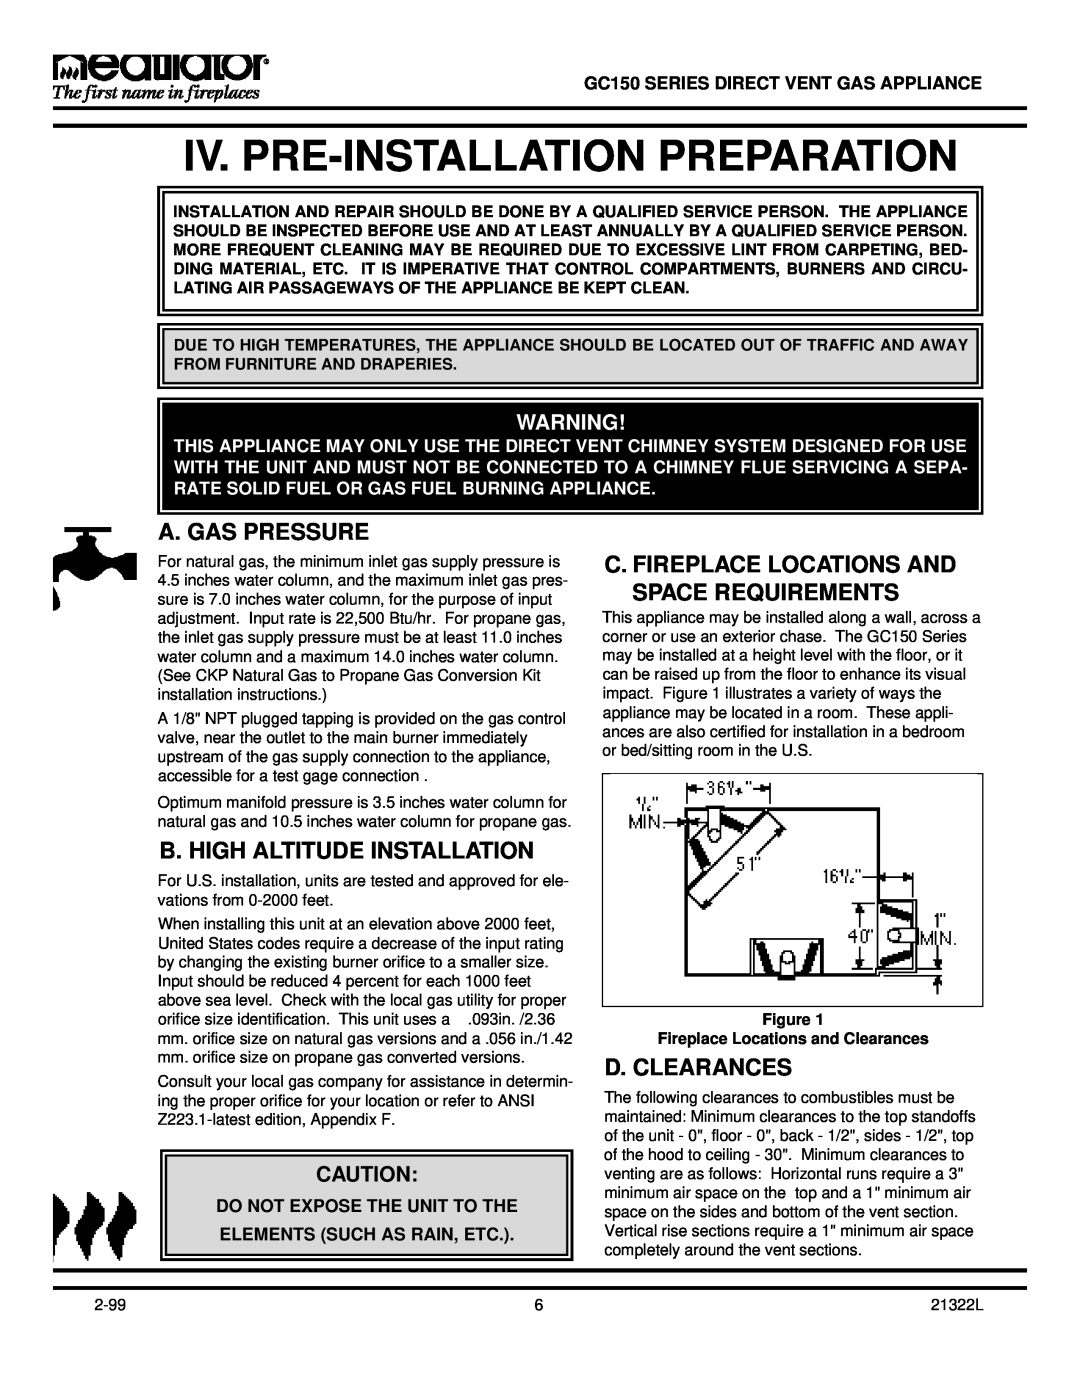 Heatiator GC150 owner manual Iv. Pre-Installationpreparation, A. Gas Pressure, B. High Altitude Installation, D. Clearances 